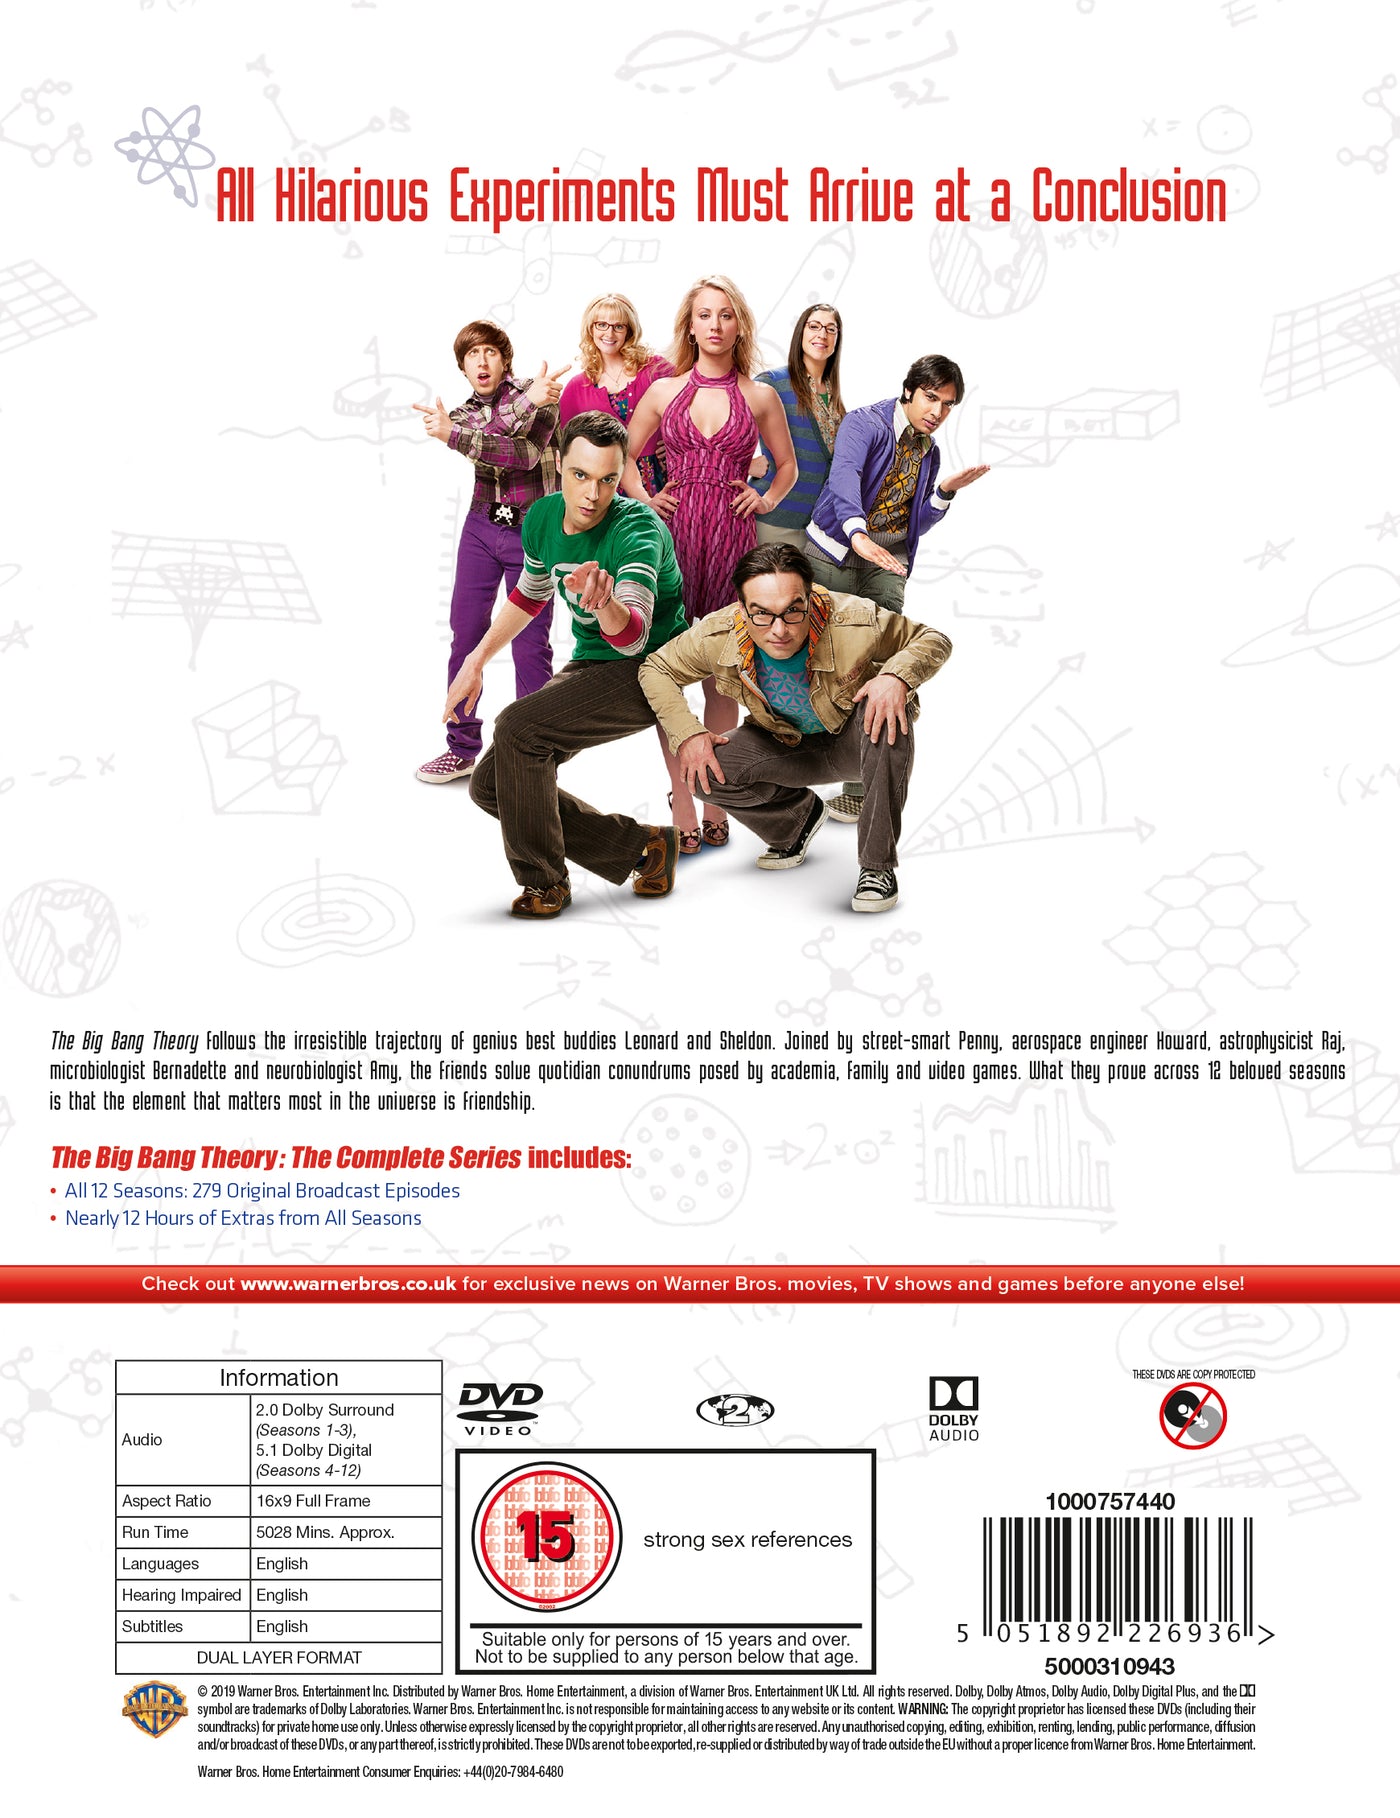 The Big Bang Theory Seasons 1-12 (DVD)